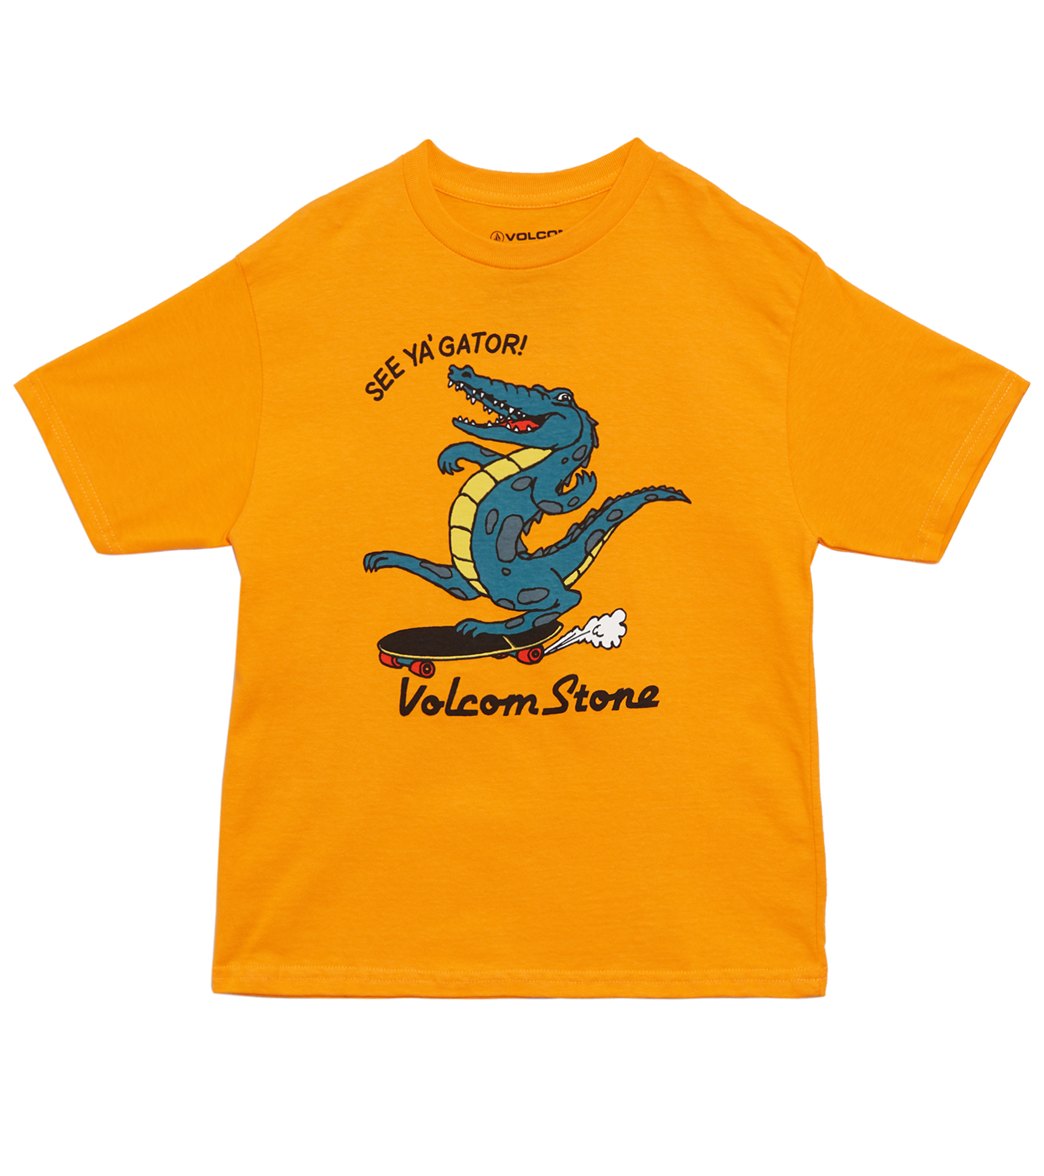 Volcom Boys' See Ya Gator Short Sleeve Tee Shirt Toddler/Little/Big Kid - Orange Xl Big Cotton/Polyester - Swimoutlet.com